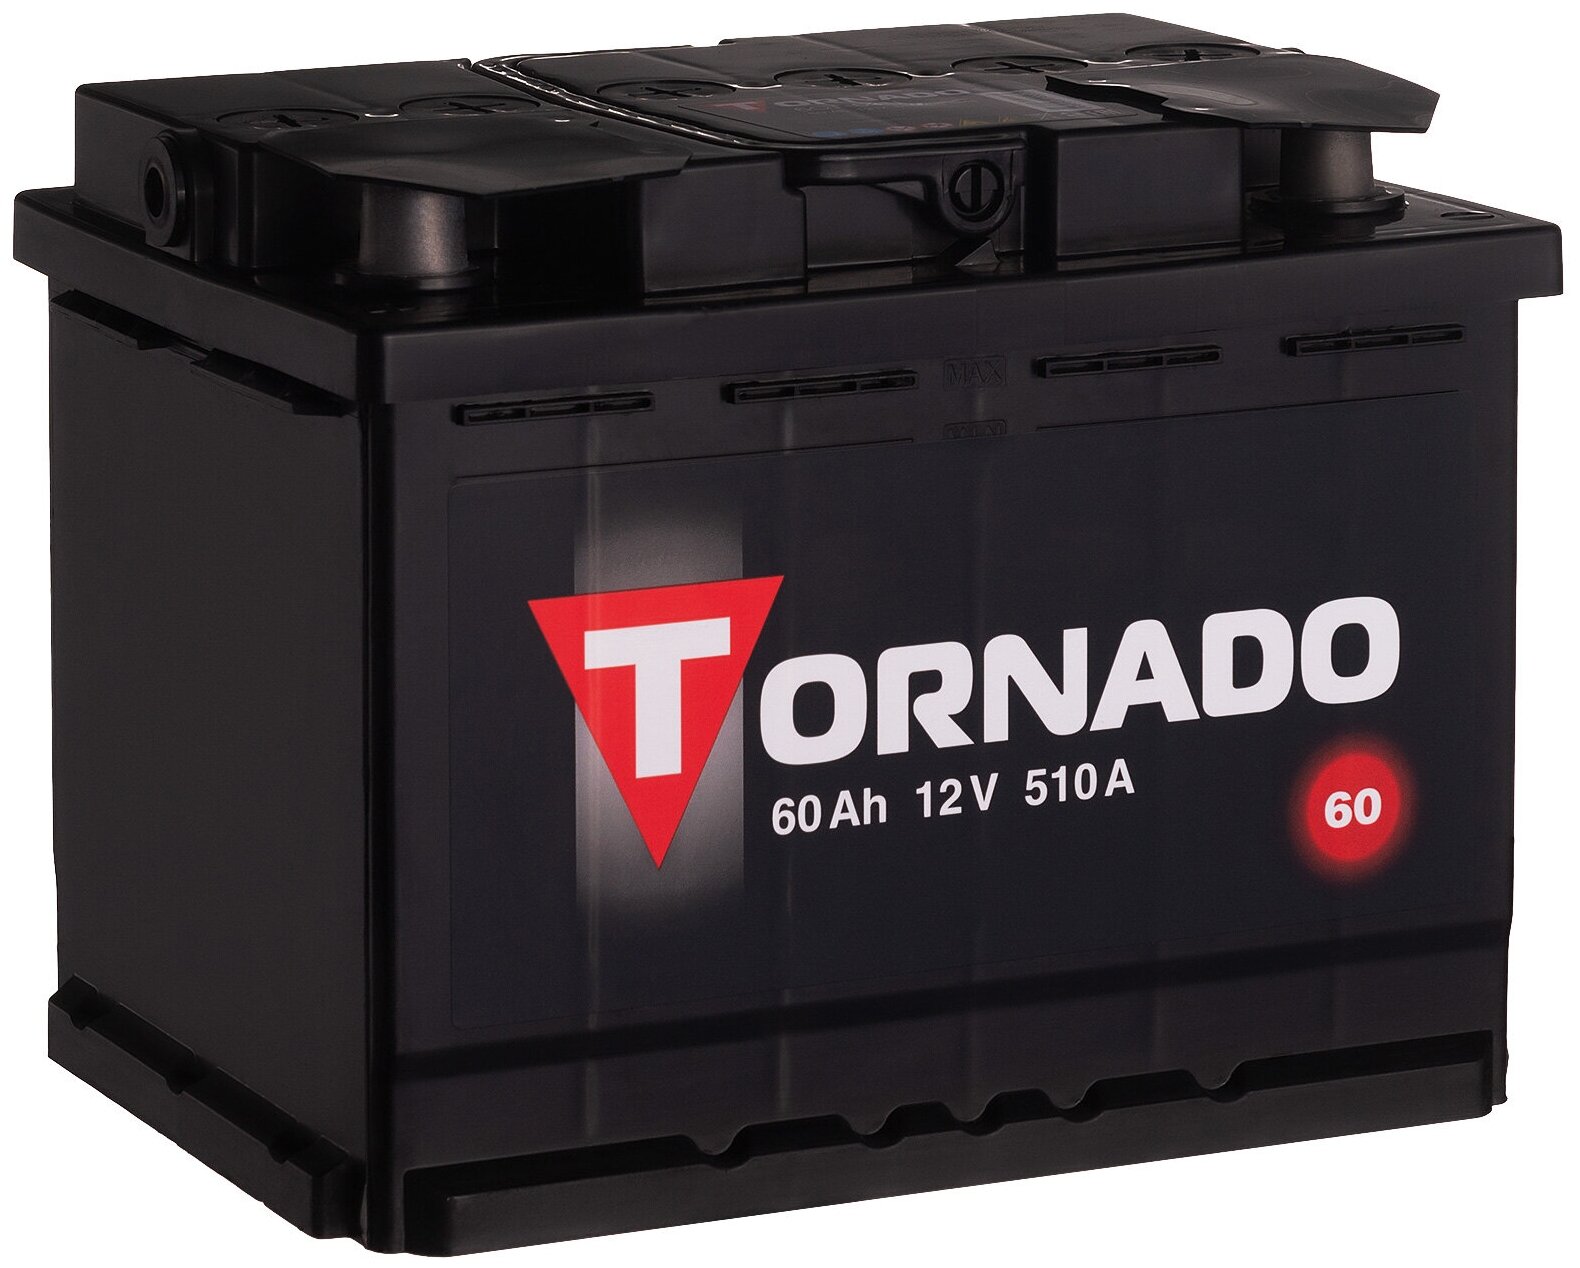 Автомобильный аккумулятор TORNADO 6CT-60 N (арт. 560107080)